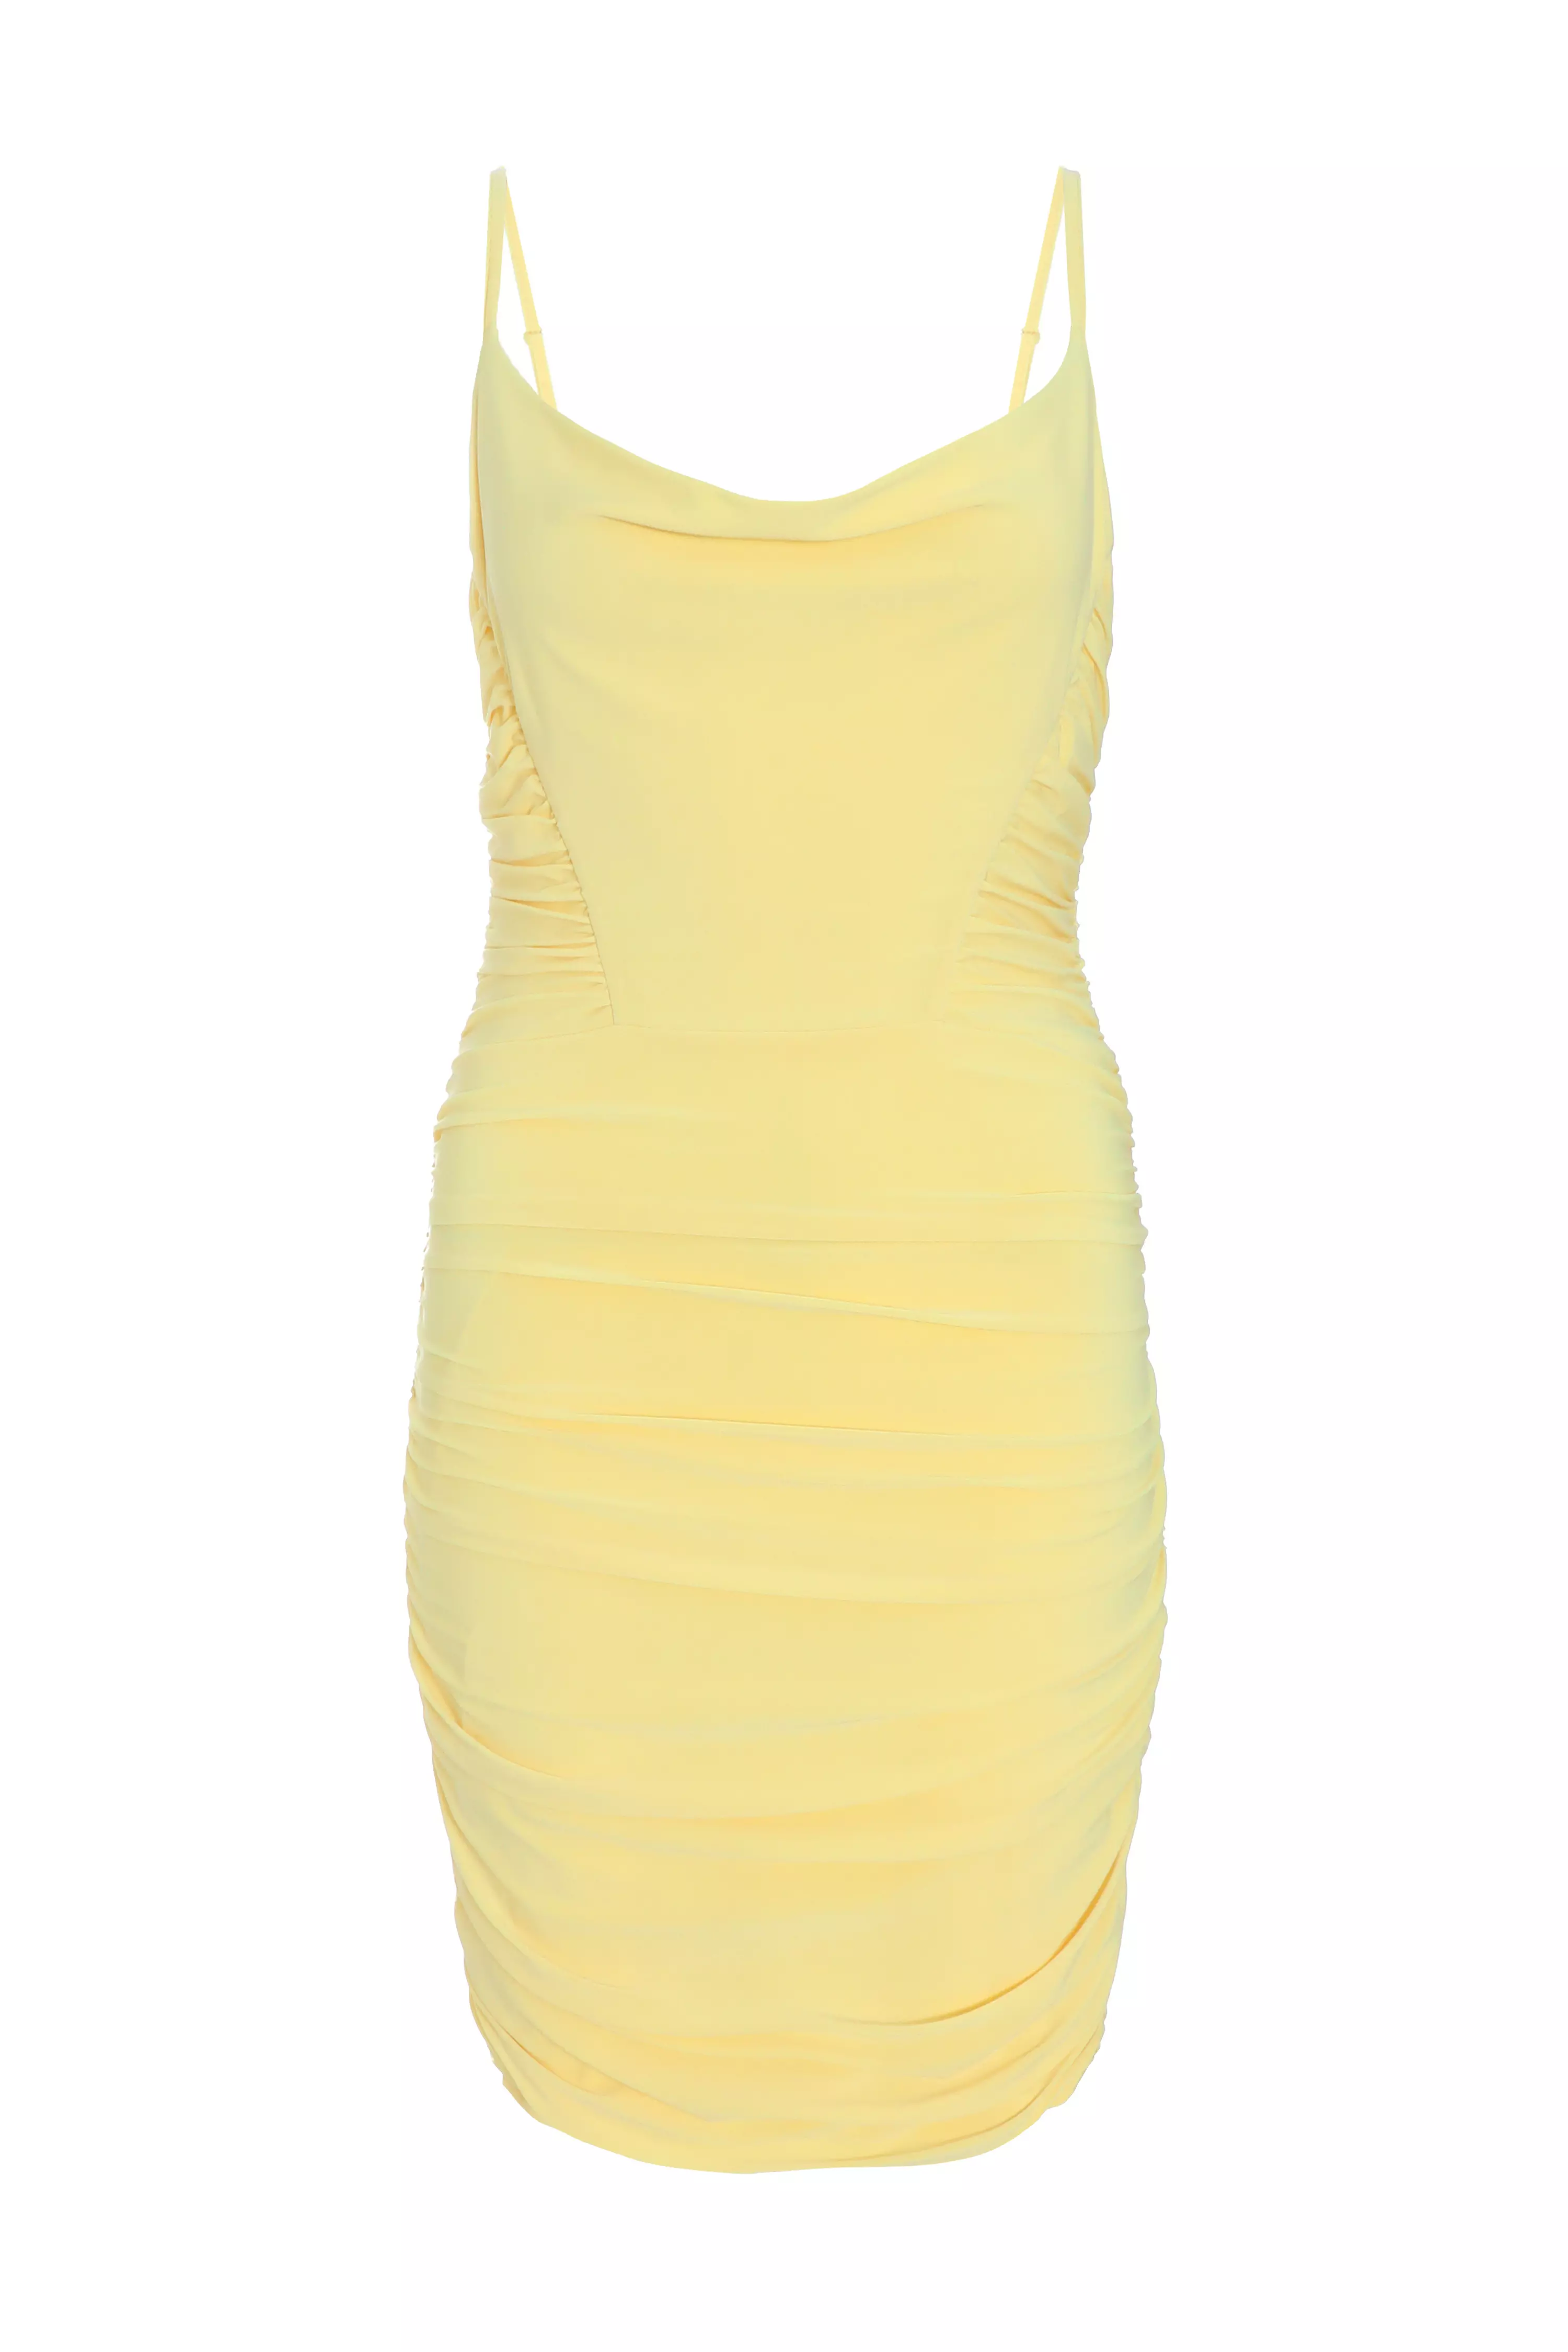 Yellow Ruched Bodycon Mini Dress